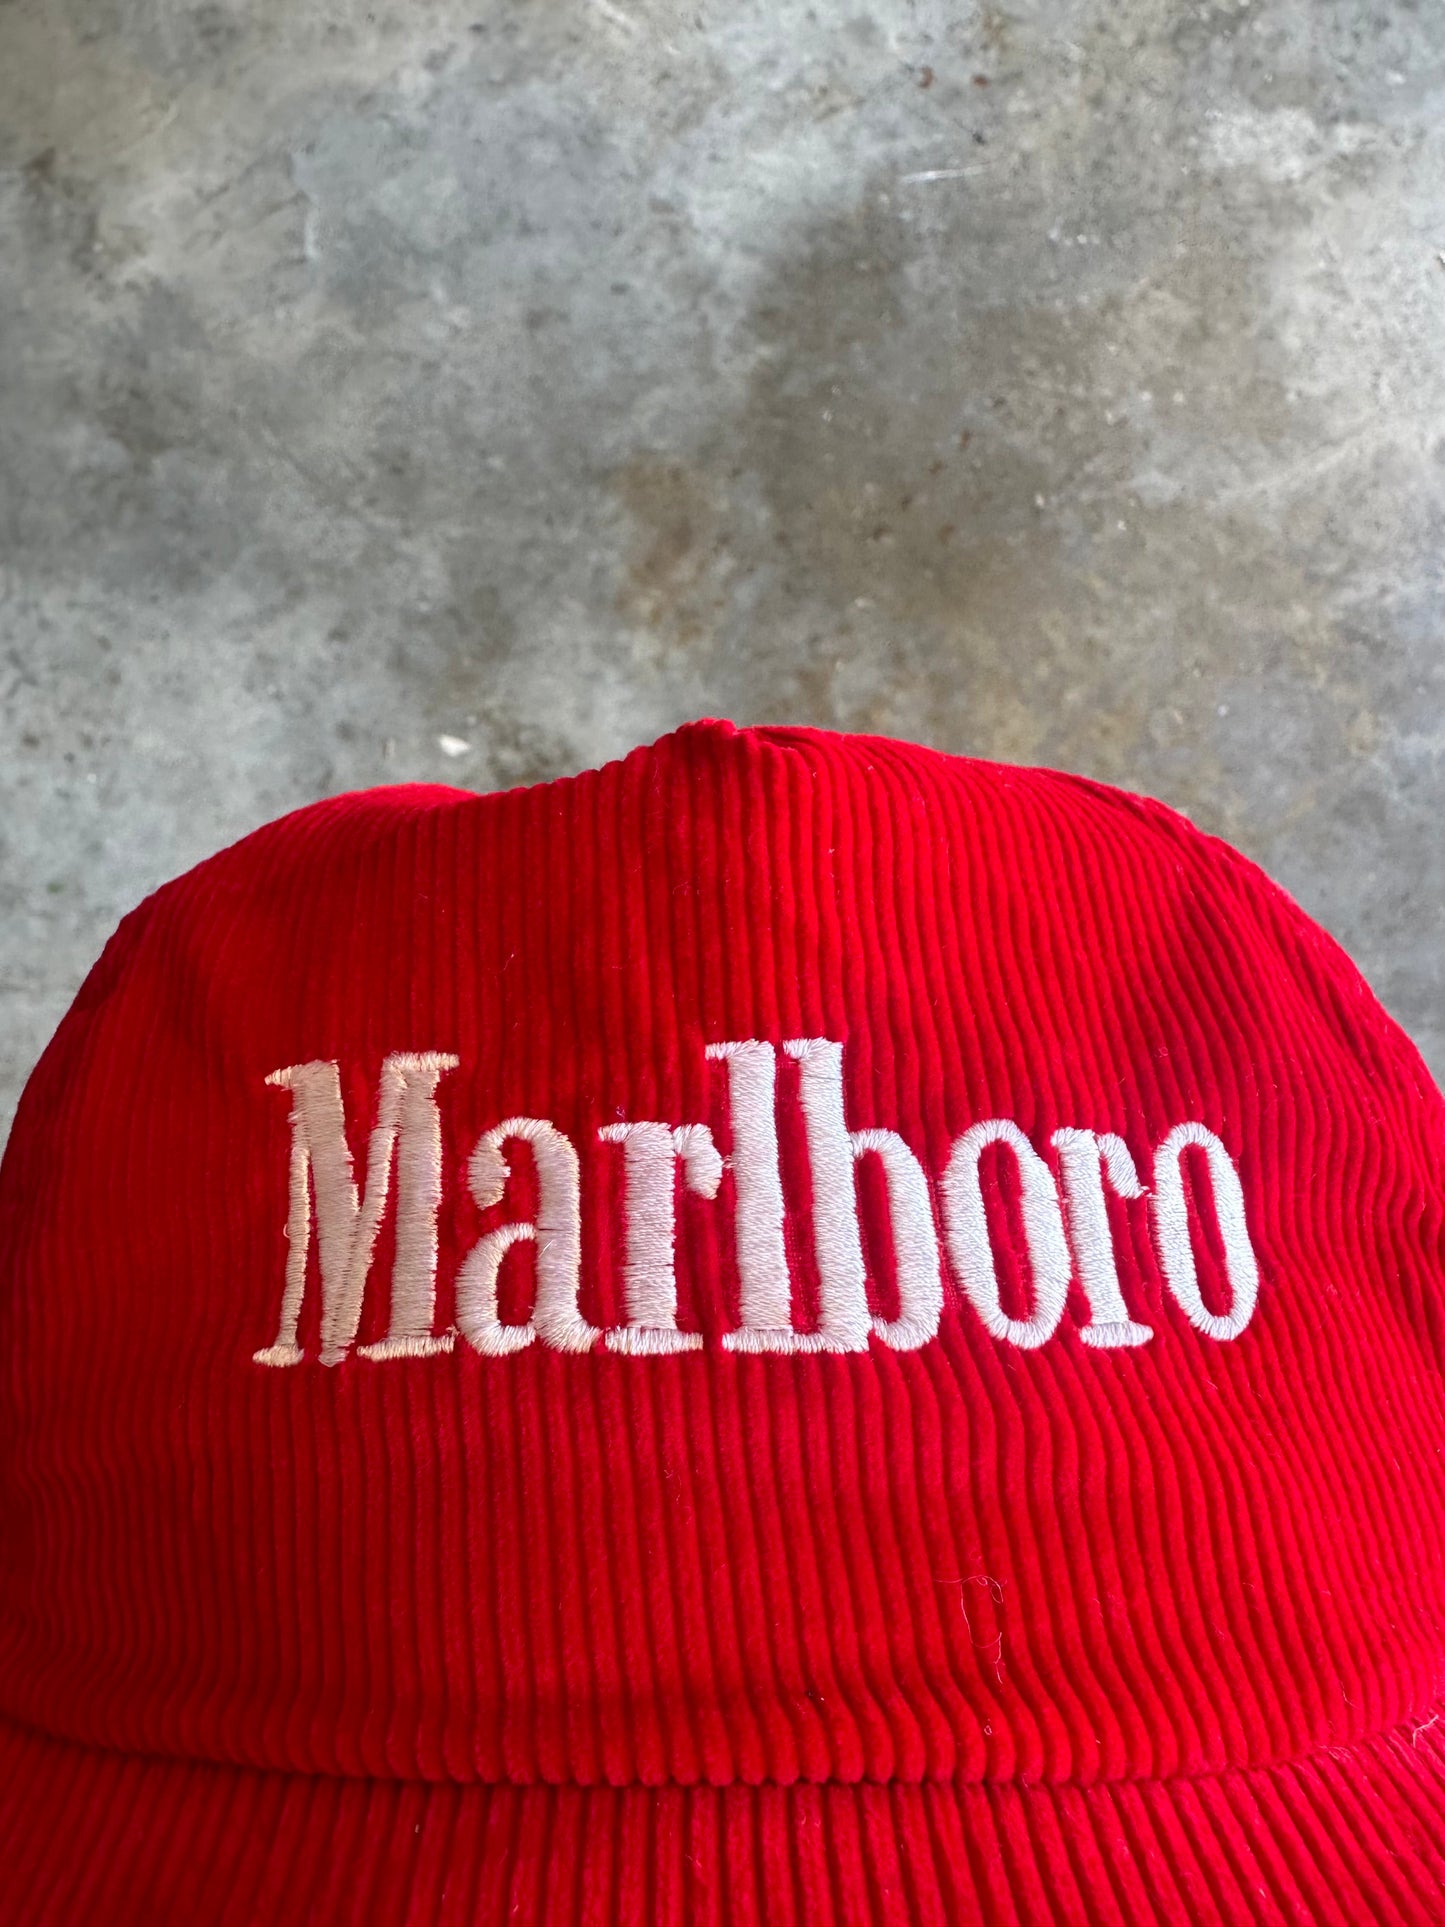 (OS) Vintage Marlboro Hat